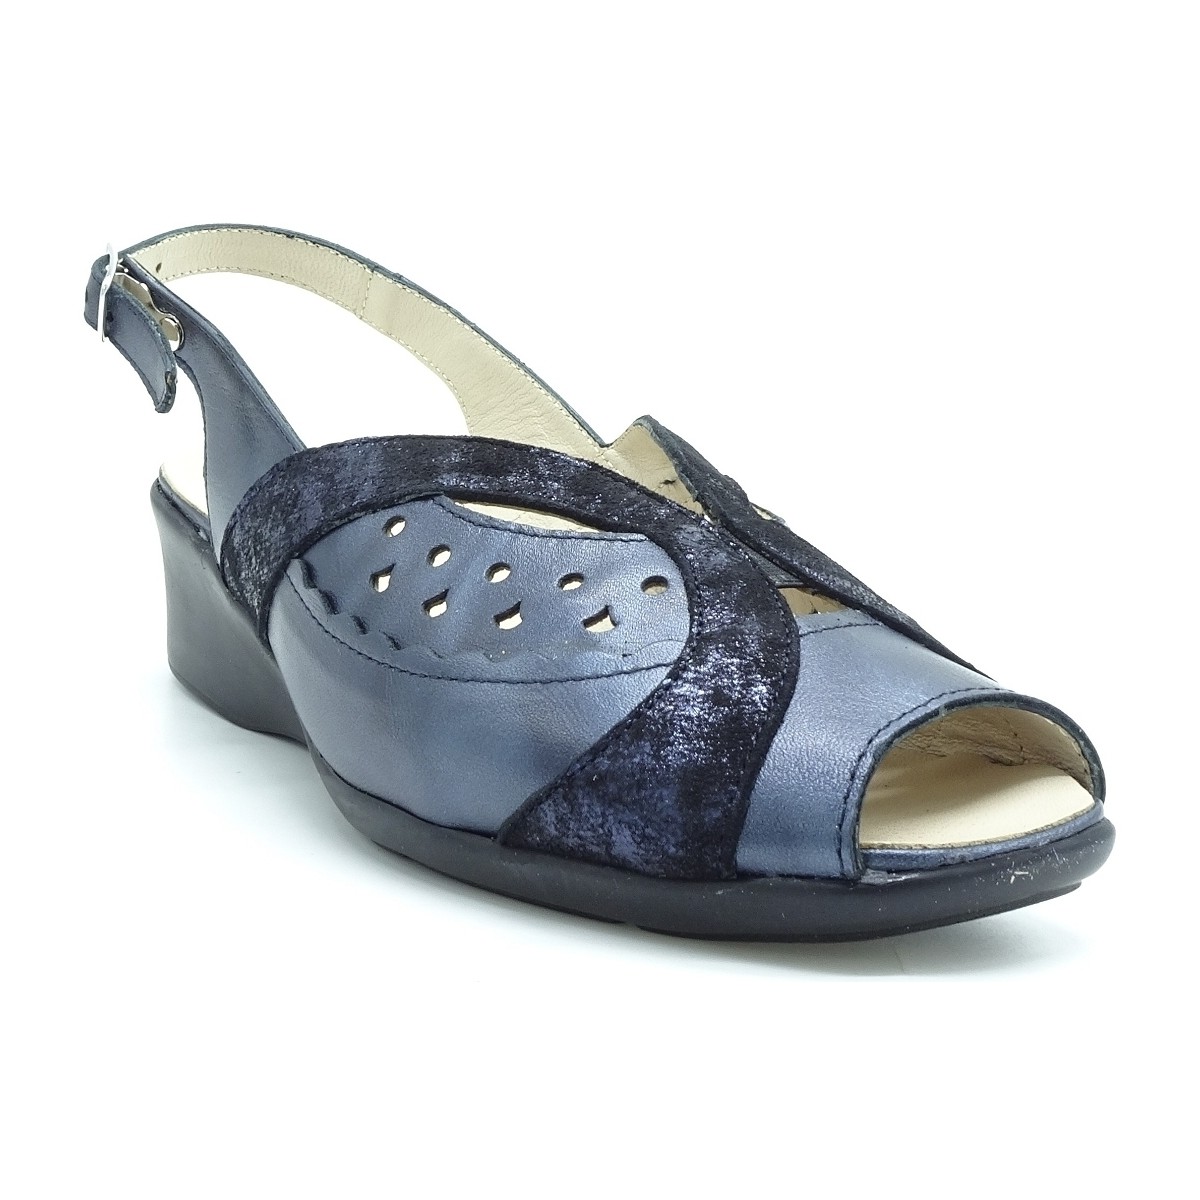 Chaussures Femme Sandales et Nu-pieds Geollamy CASSIS Bleu